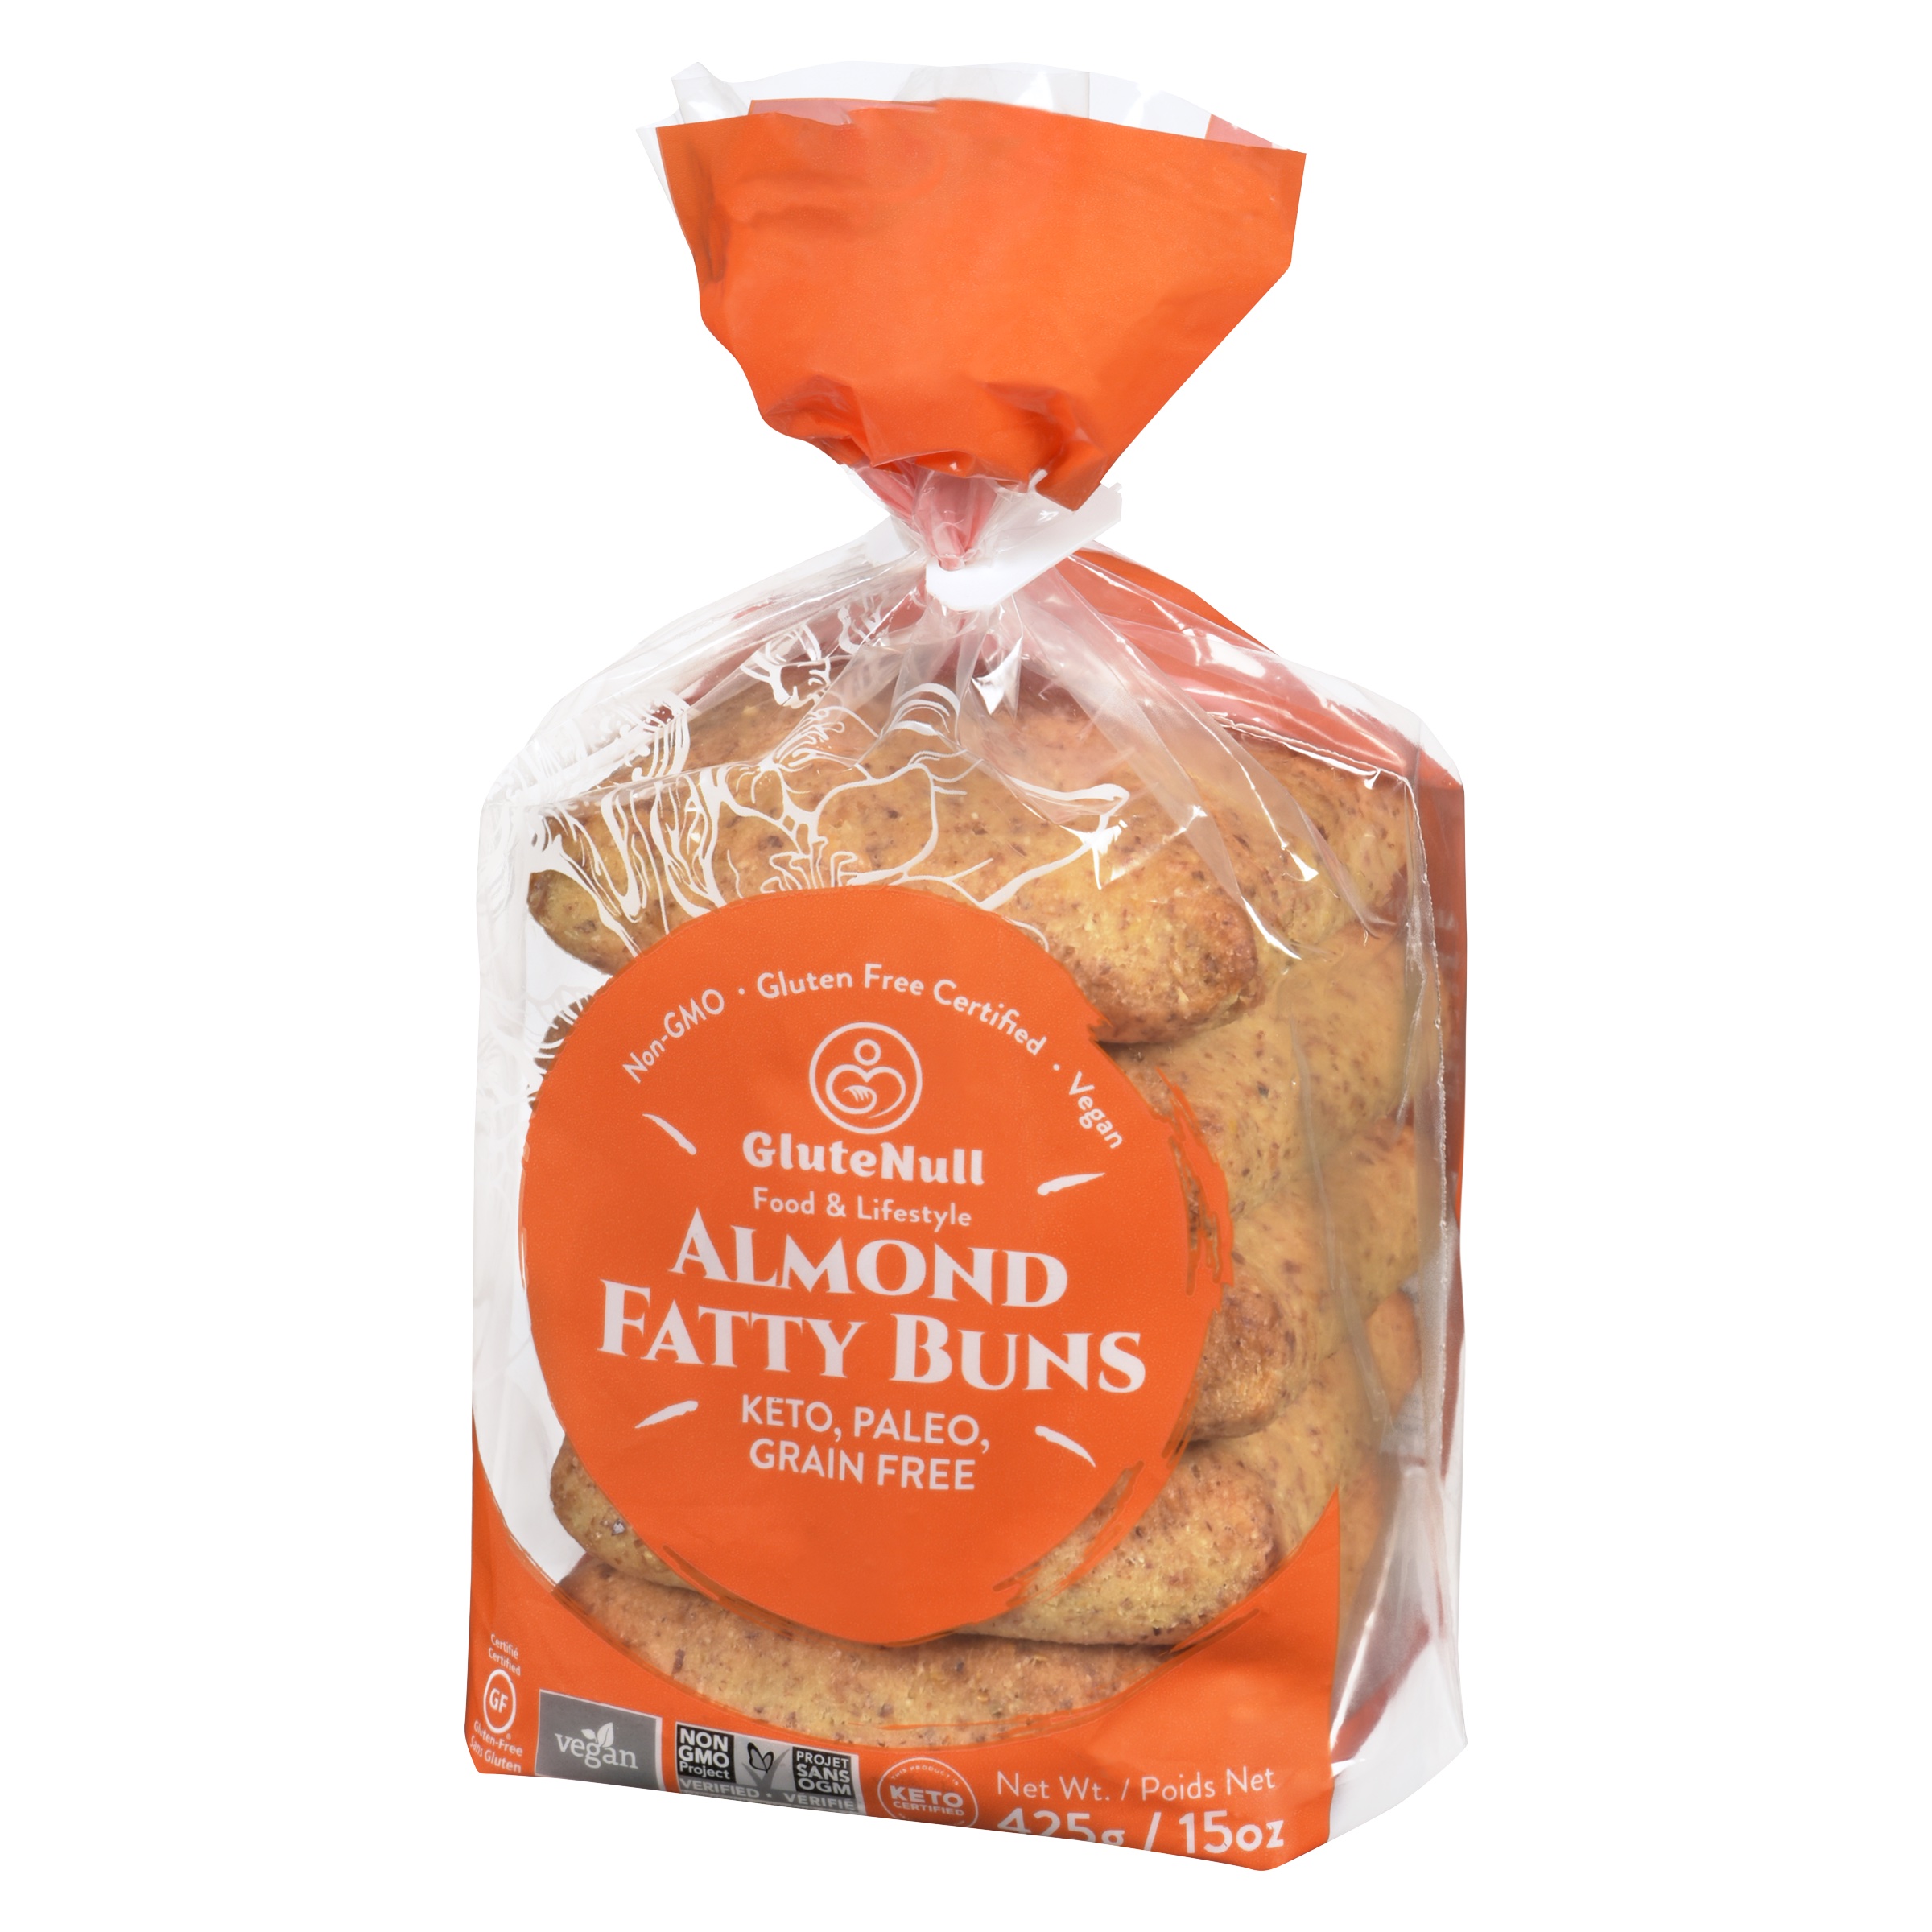 Almond Fatty Buns Keto